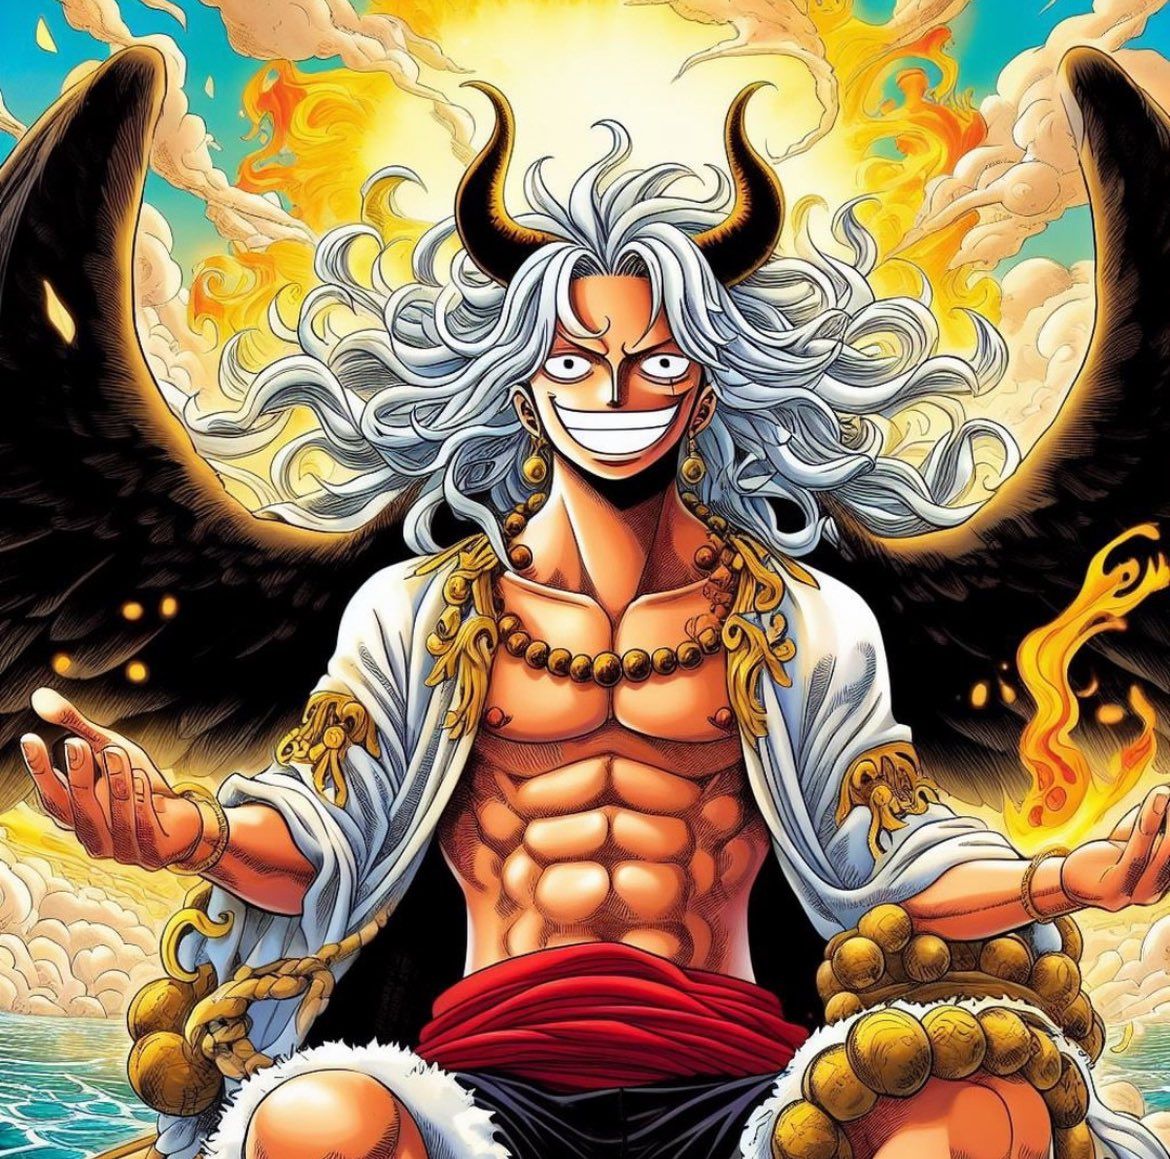 Menguak Teori One Piece Terkait Kemampuan Gear 5 Joy Boy, Benarkah Monkey D Luffy adalah Reinkarnasi dari...